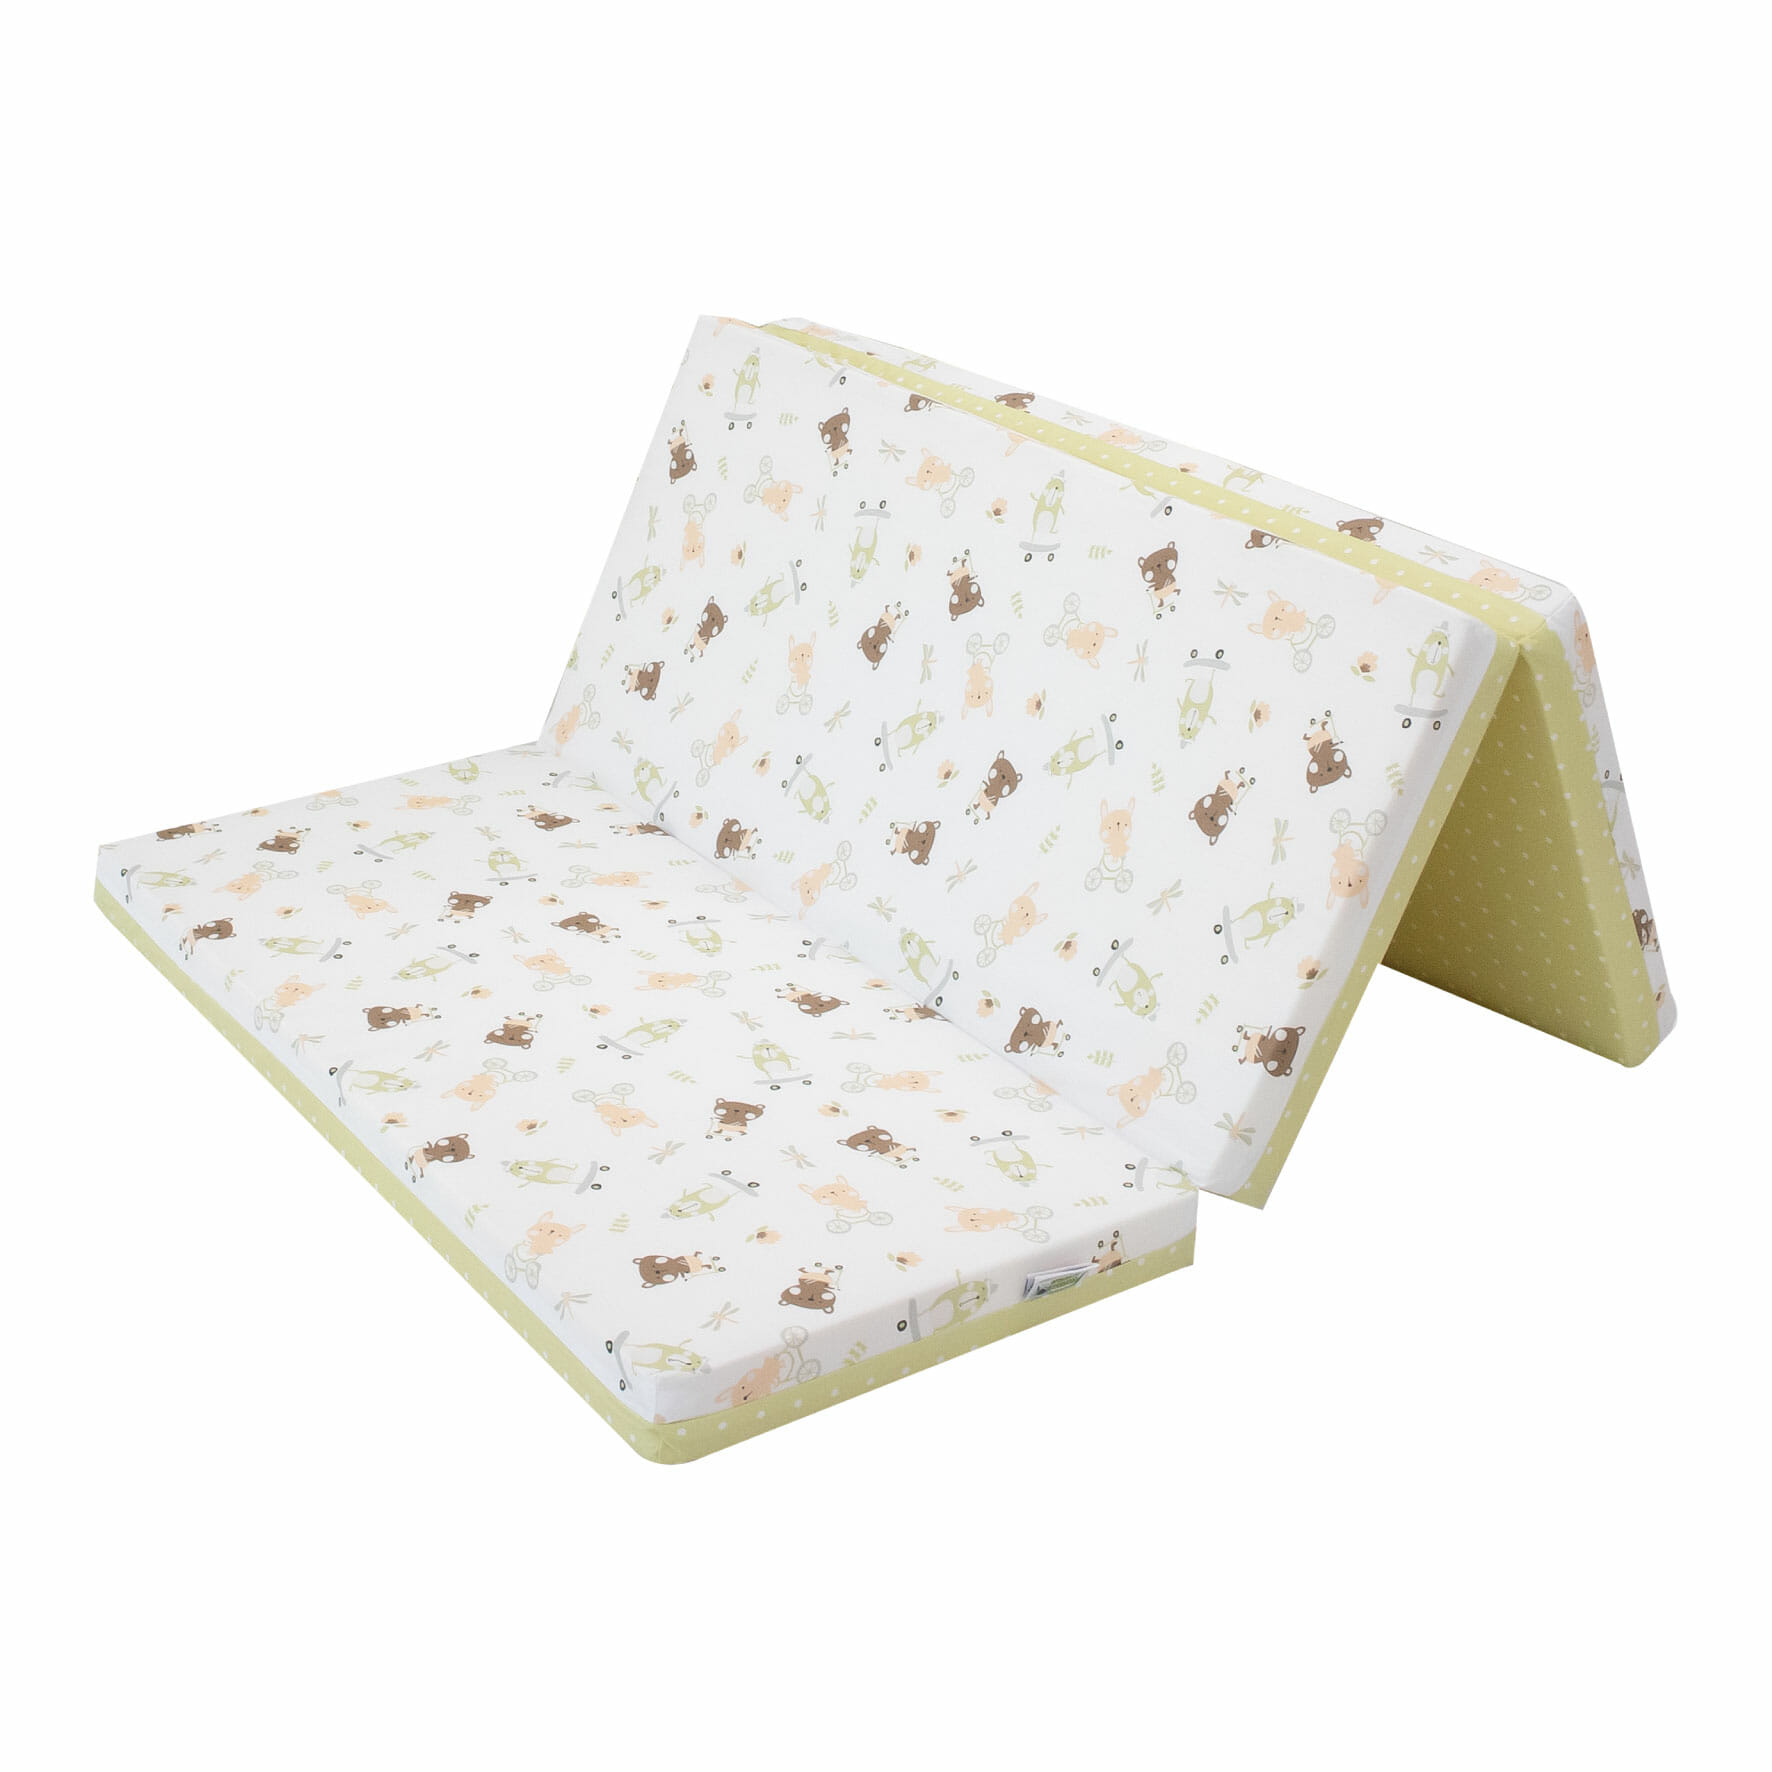 Babylove Premium 3-Fold Playpen Foam Mattress